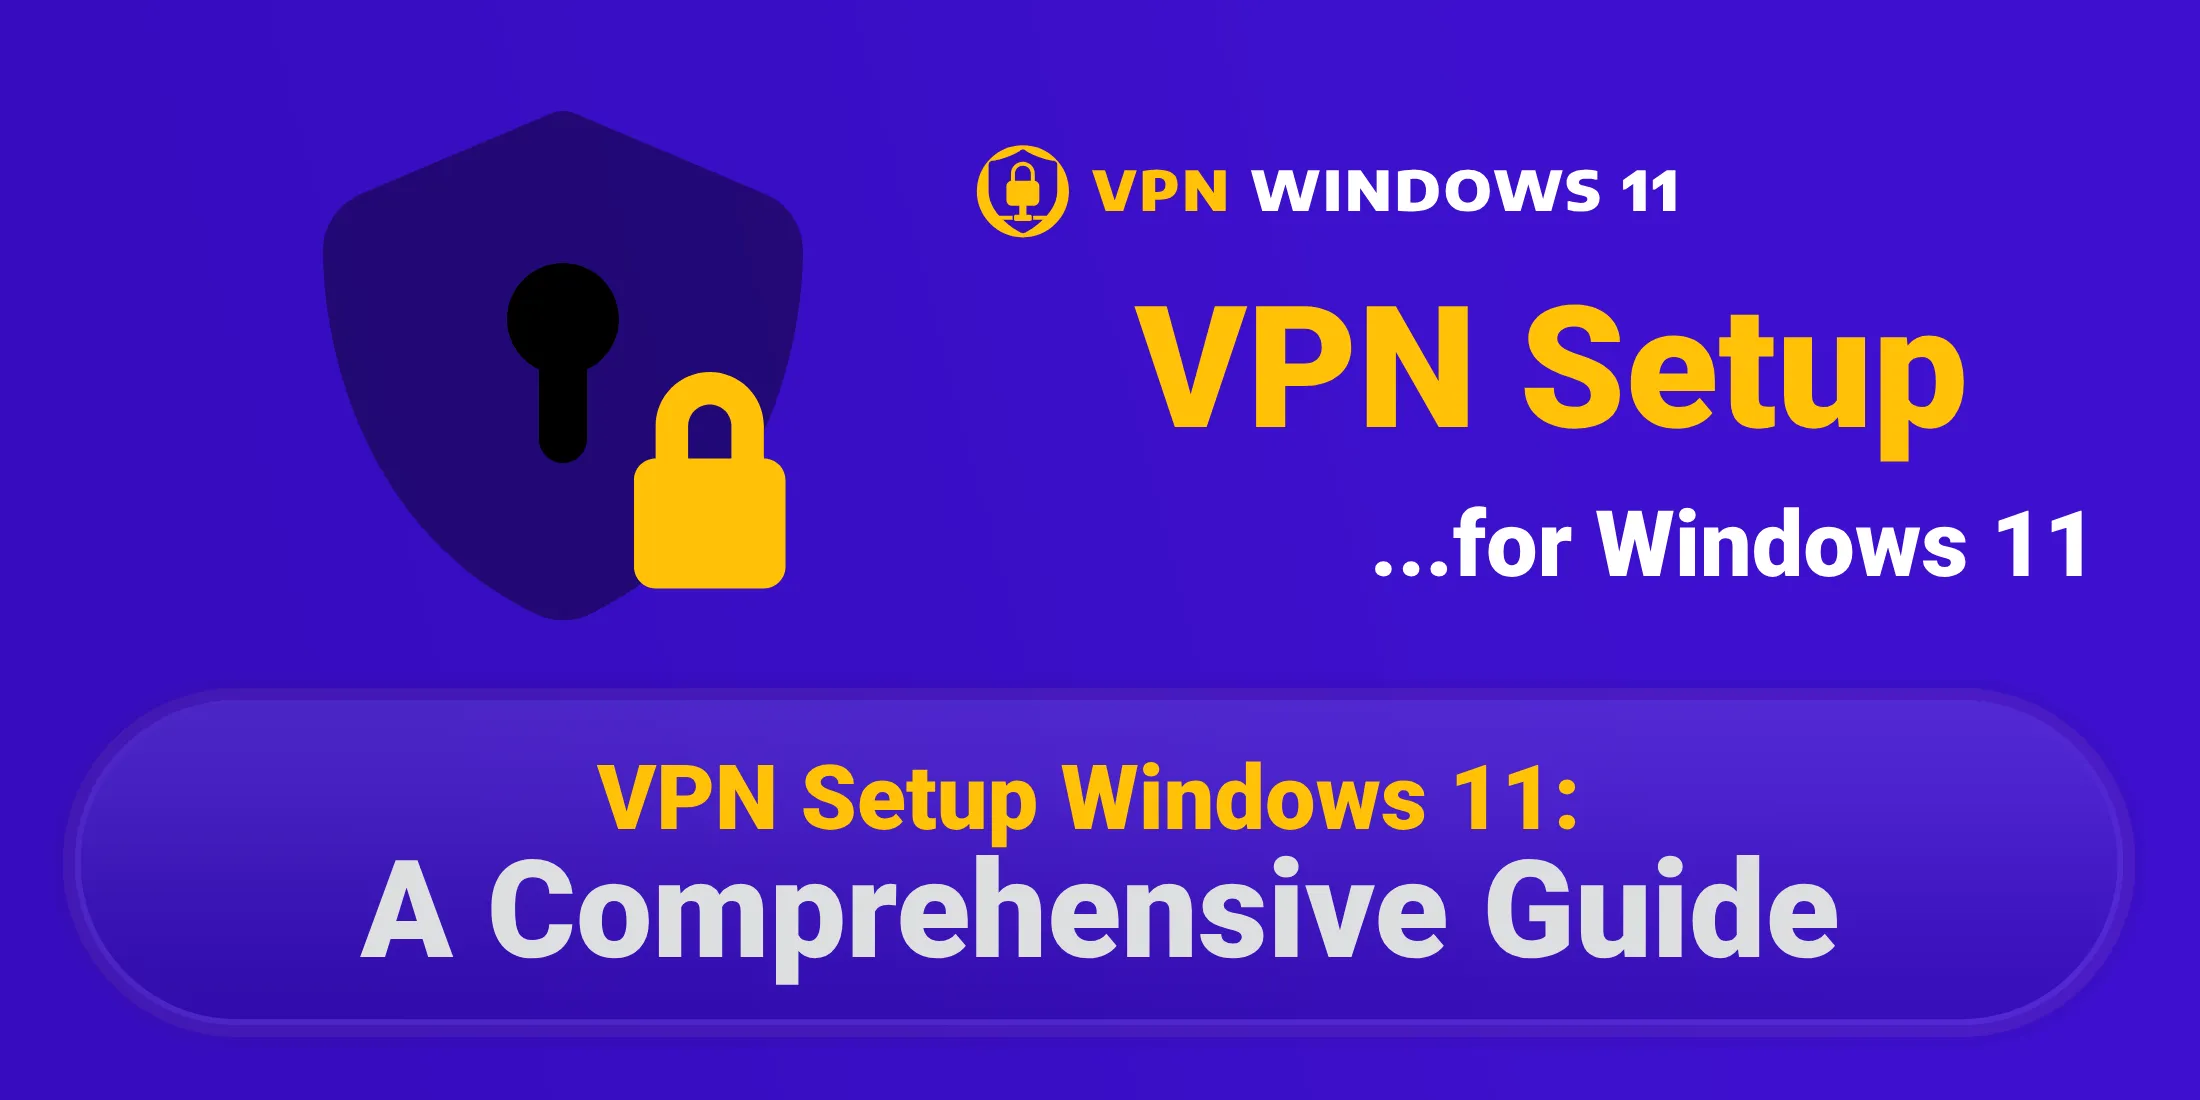 VPN Setup Windows 11: A Comprehensive Guide